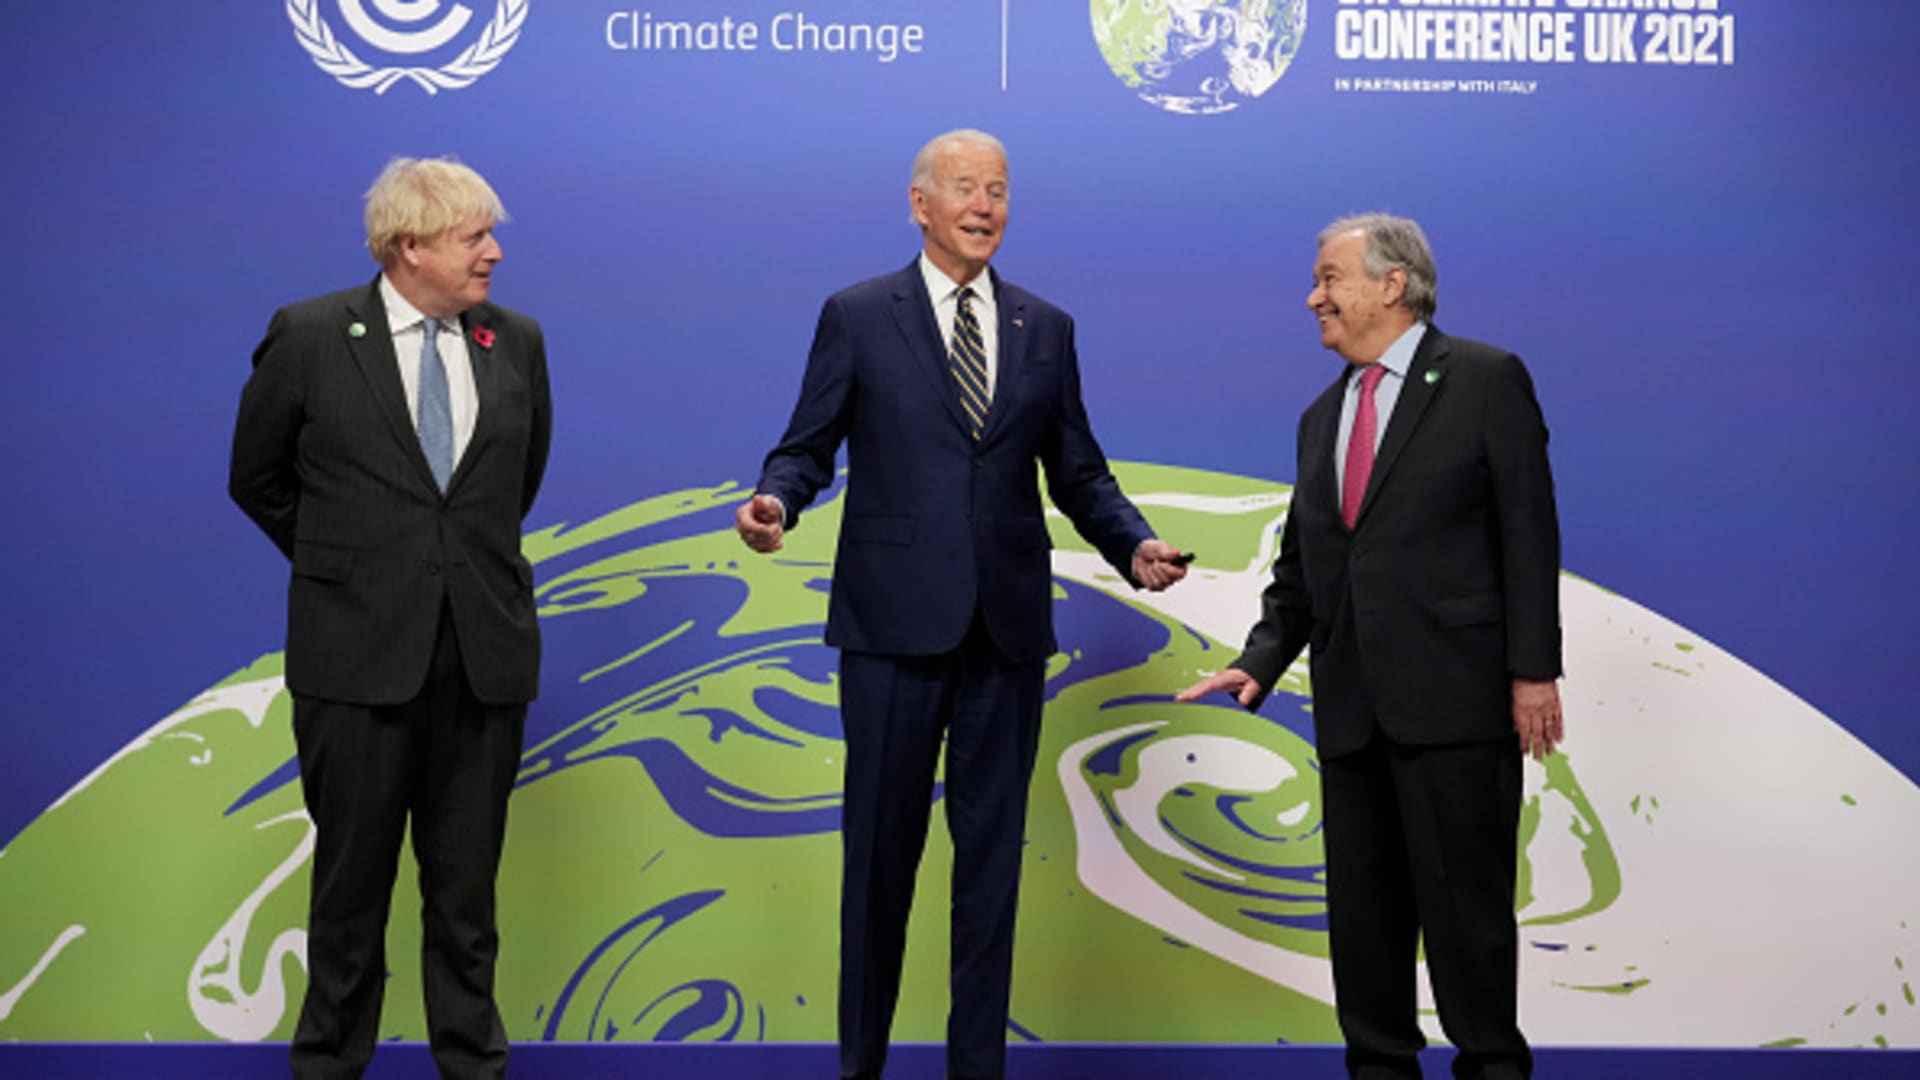 British Prime Minister Boris Johnson (L) and UN Secretary-General Antonio Guterres (R) greet U.S. President Joe Biden as they arrive for day two of COP26 at SECC on November 1, 2021 in Glasgow, Scotland.